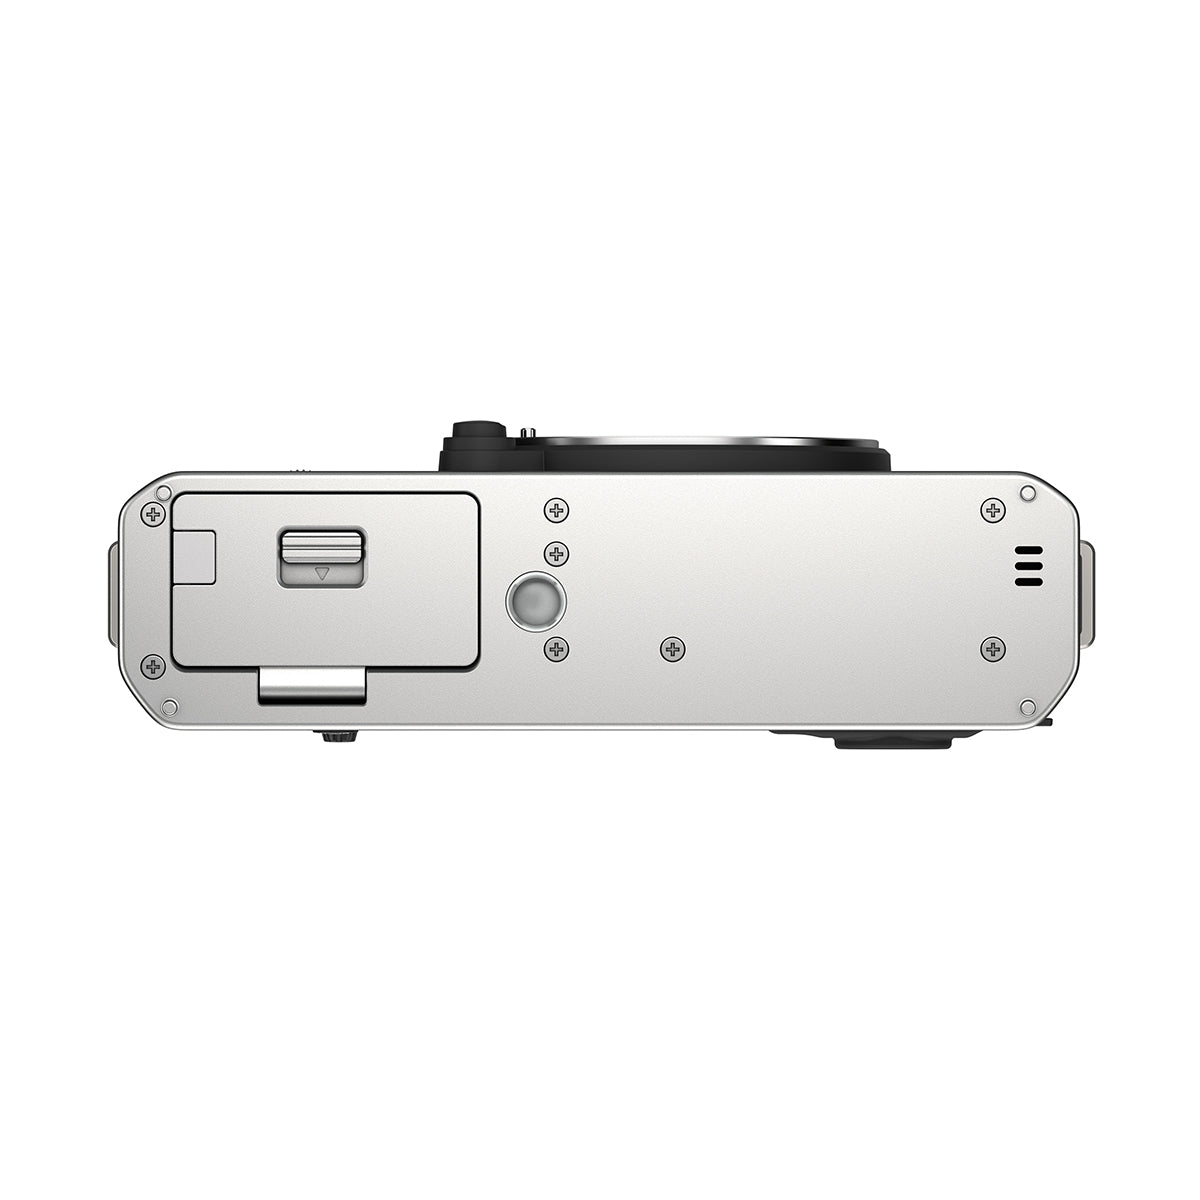 Fujifilm X-E4 Digital Camera with XF 27mm f/2.8 R WR Lens Kit (Silver)